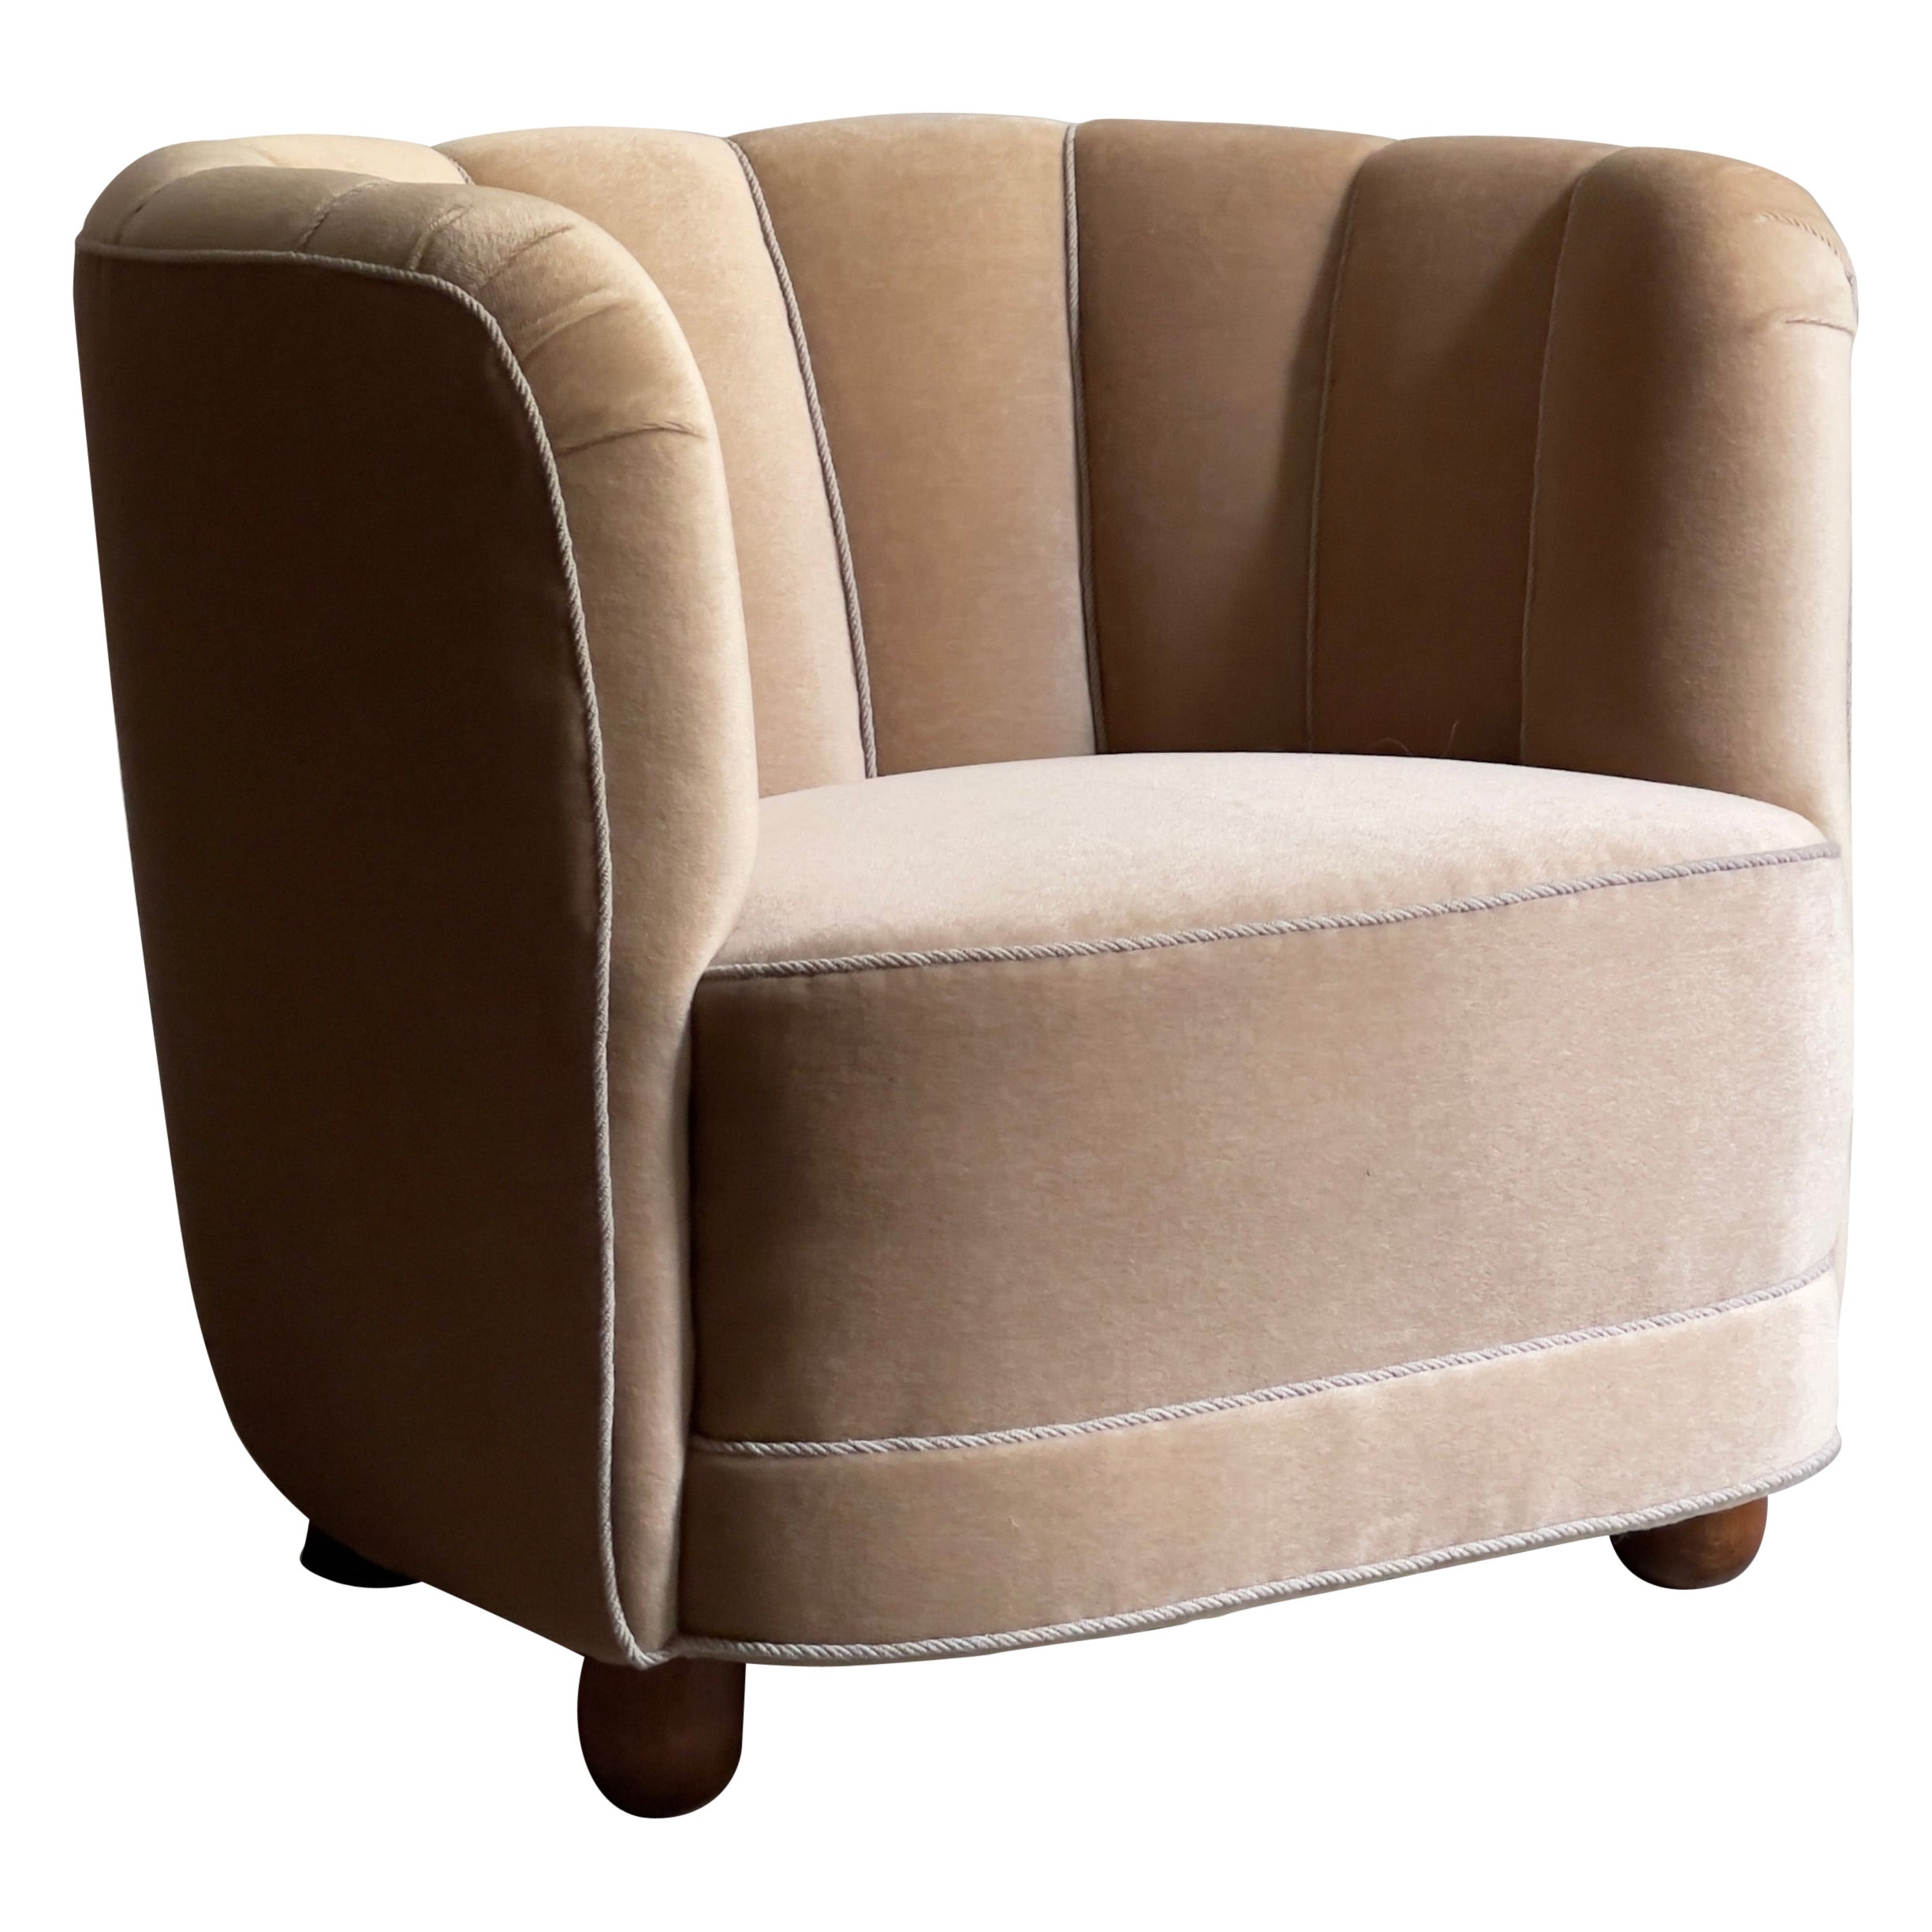 1930s Danish modern Easy Chair reupholstered in Premium beige Mohair